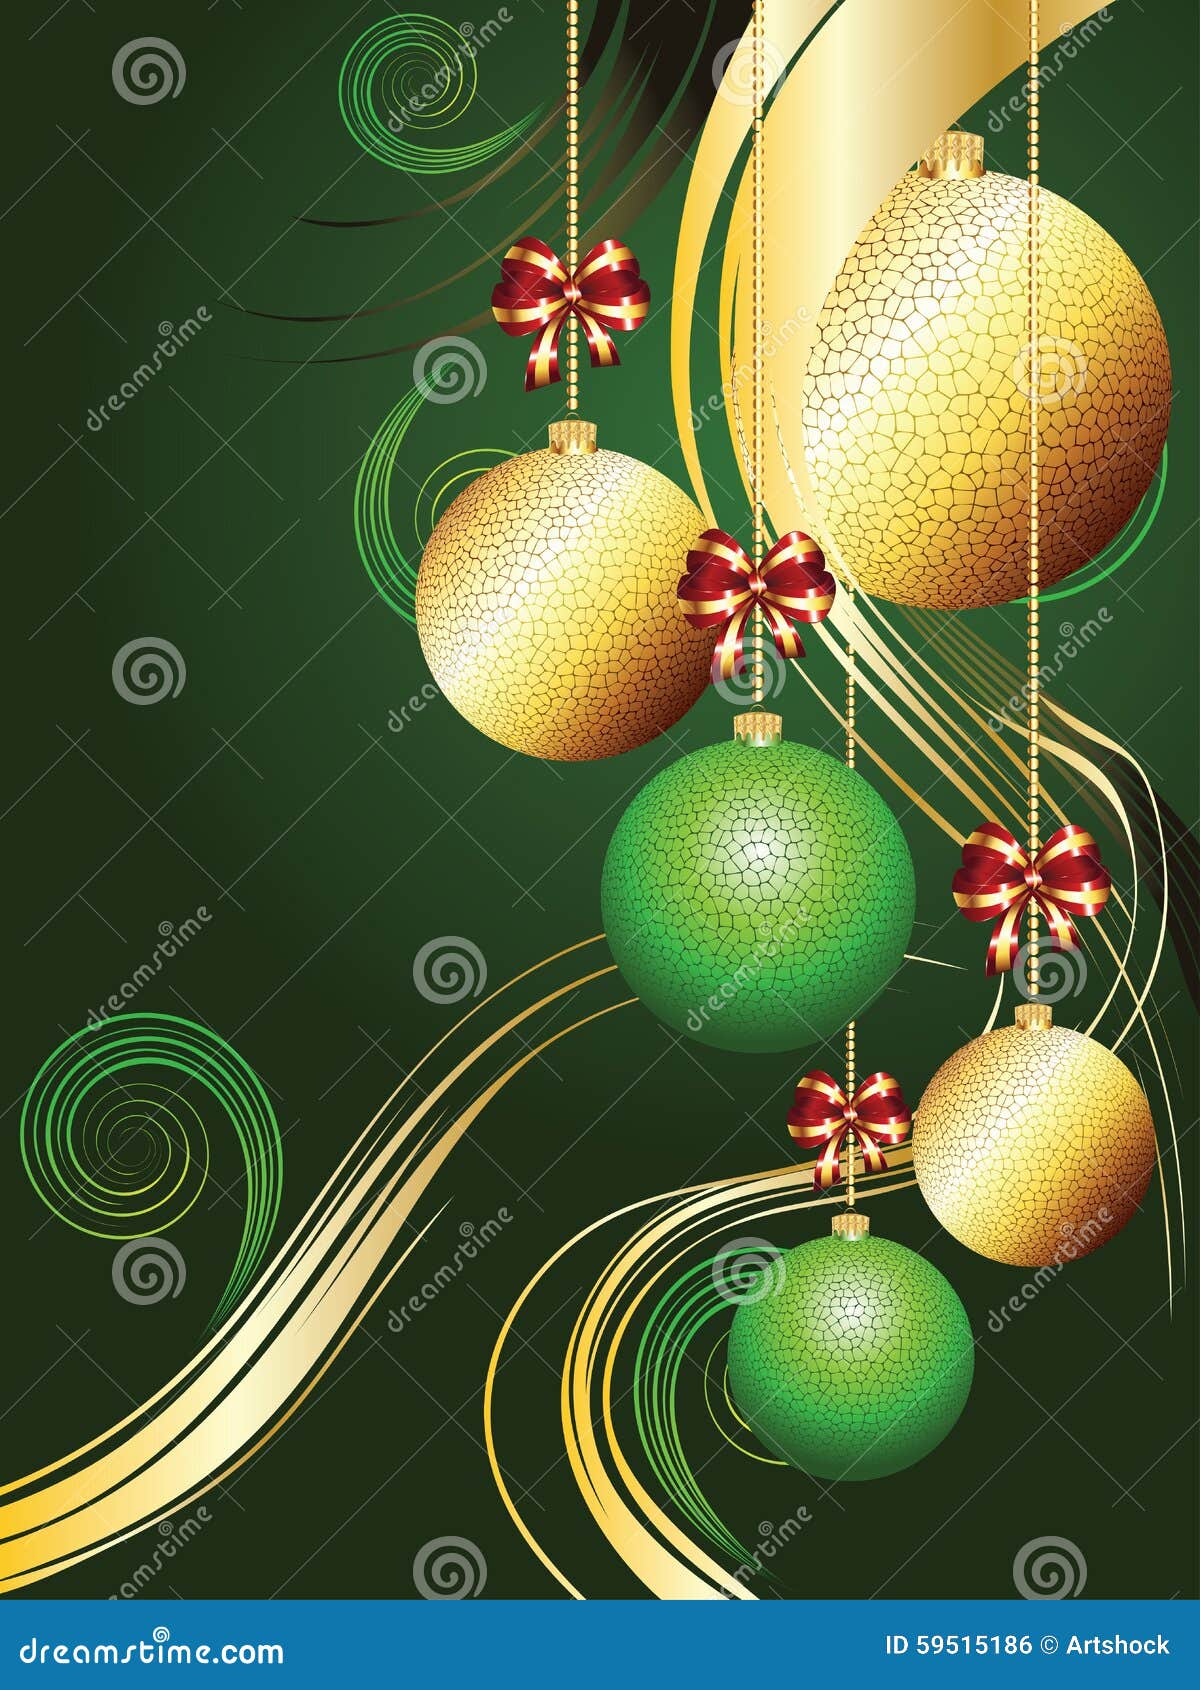 Gold and Green Xmas Balls stock illustration. Illustration of navidad ...